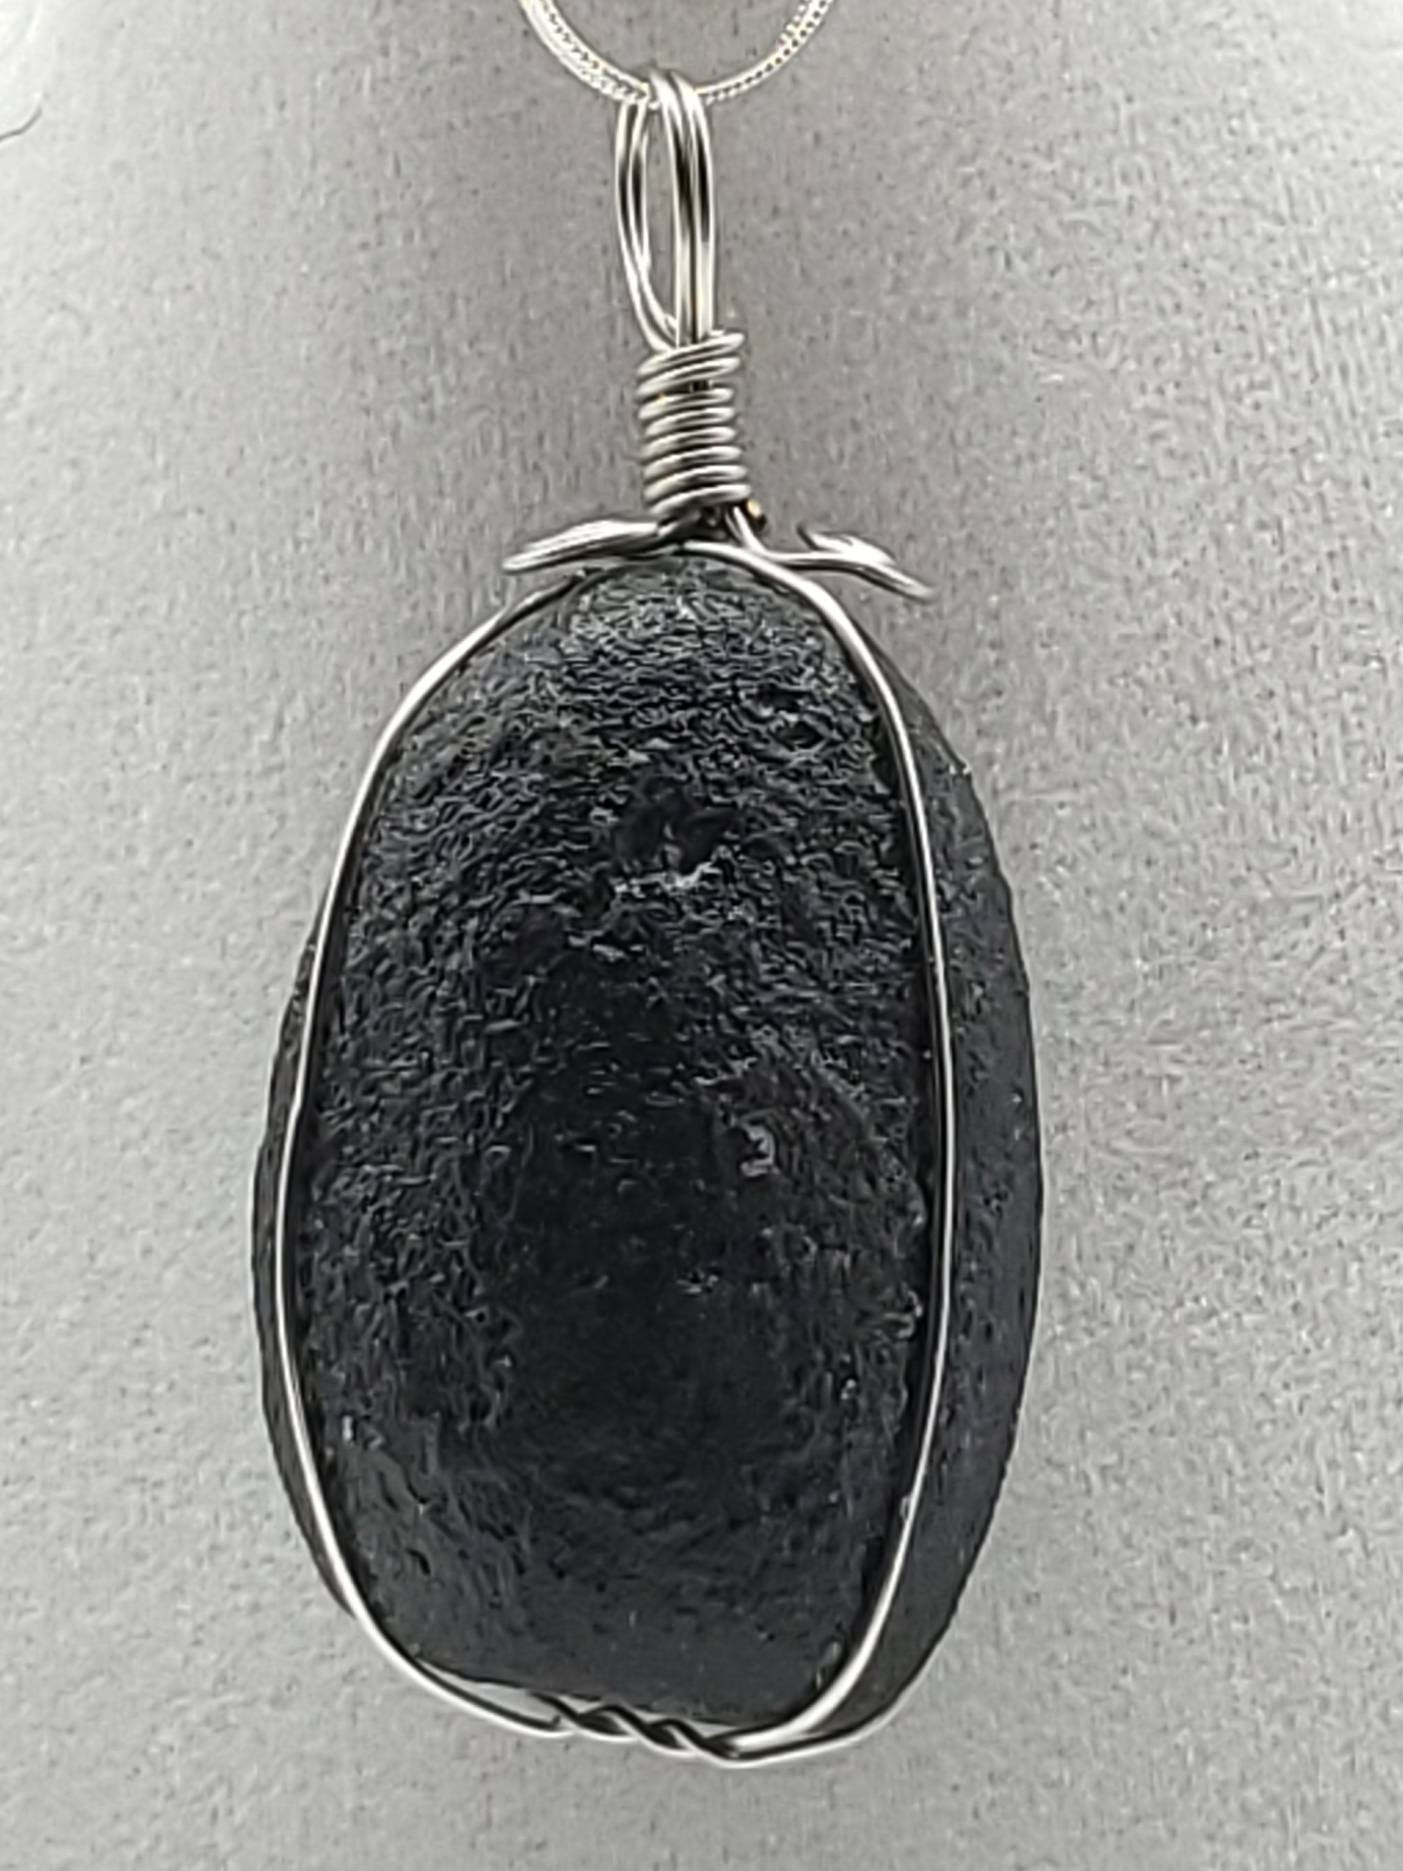 Meteorite/Tektite Pendant Necklace - The Caffeinated Raven